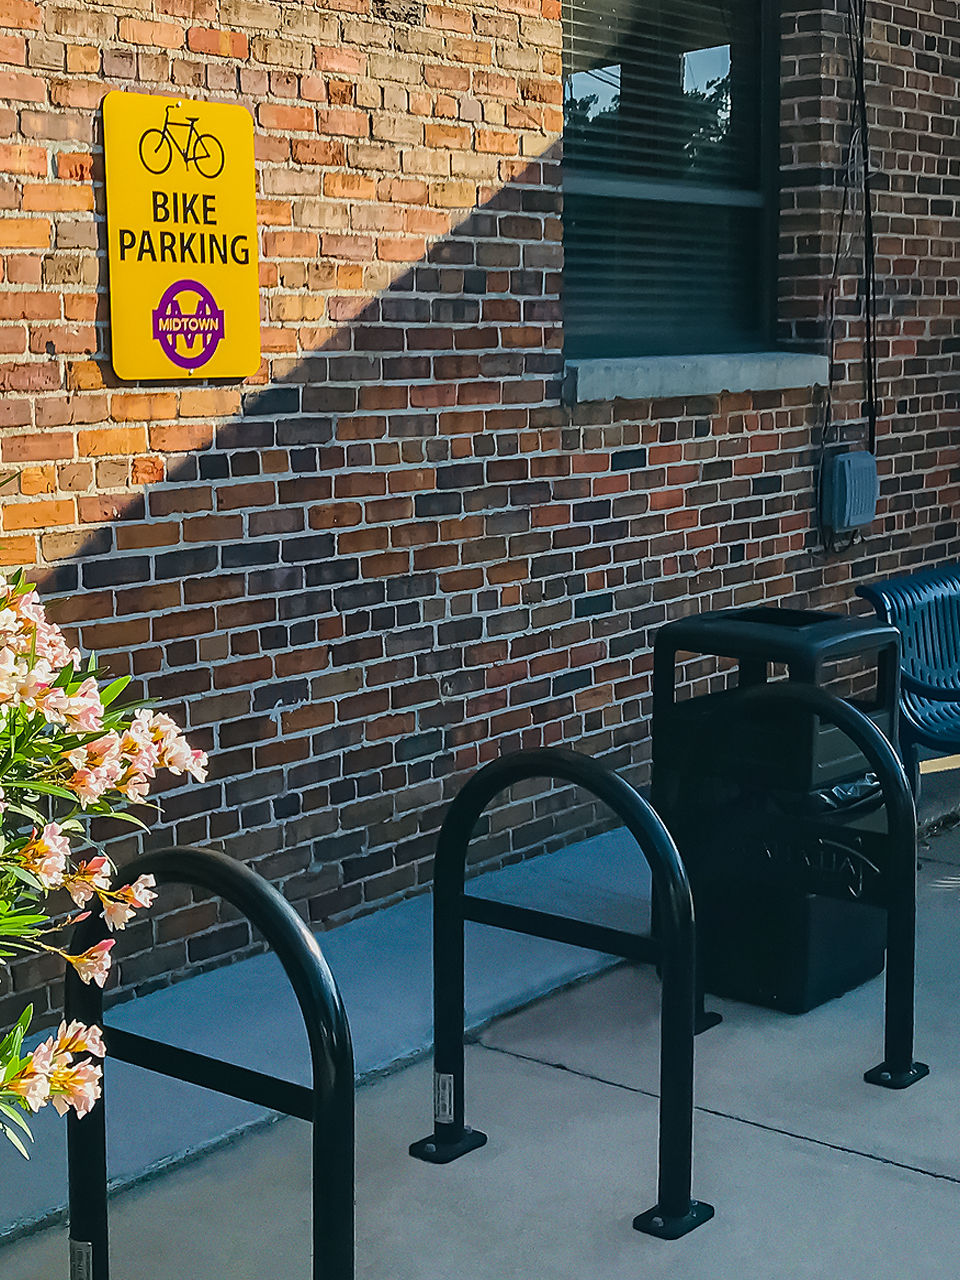 Bike Parking at Senior Center.